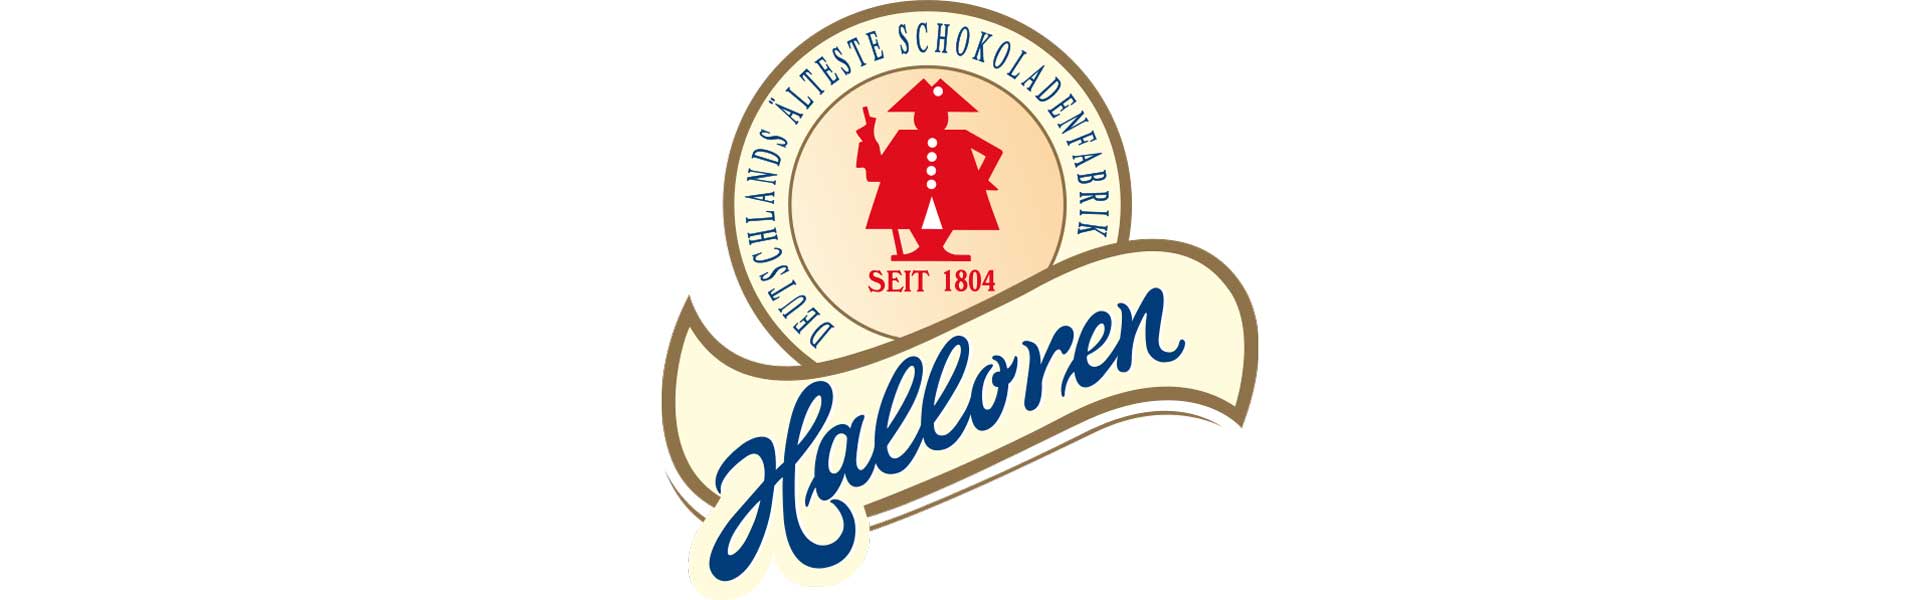 Tagesfahrt 2015 TF 1563 - Schokoladenfabrik Halloren